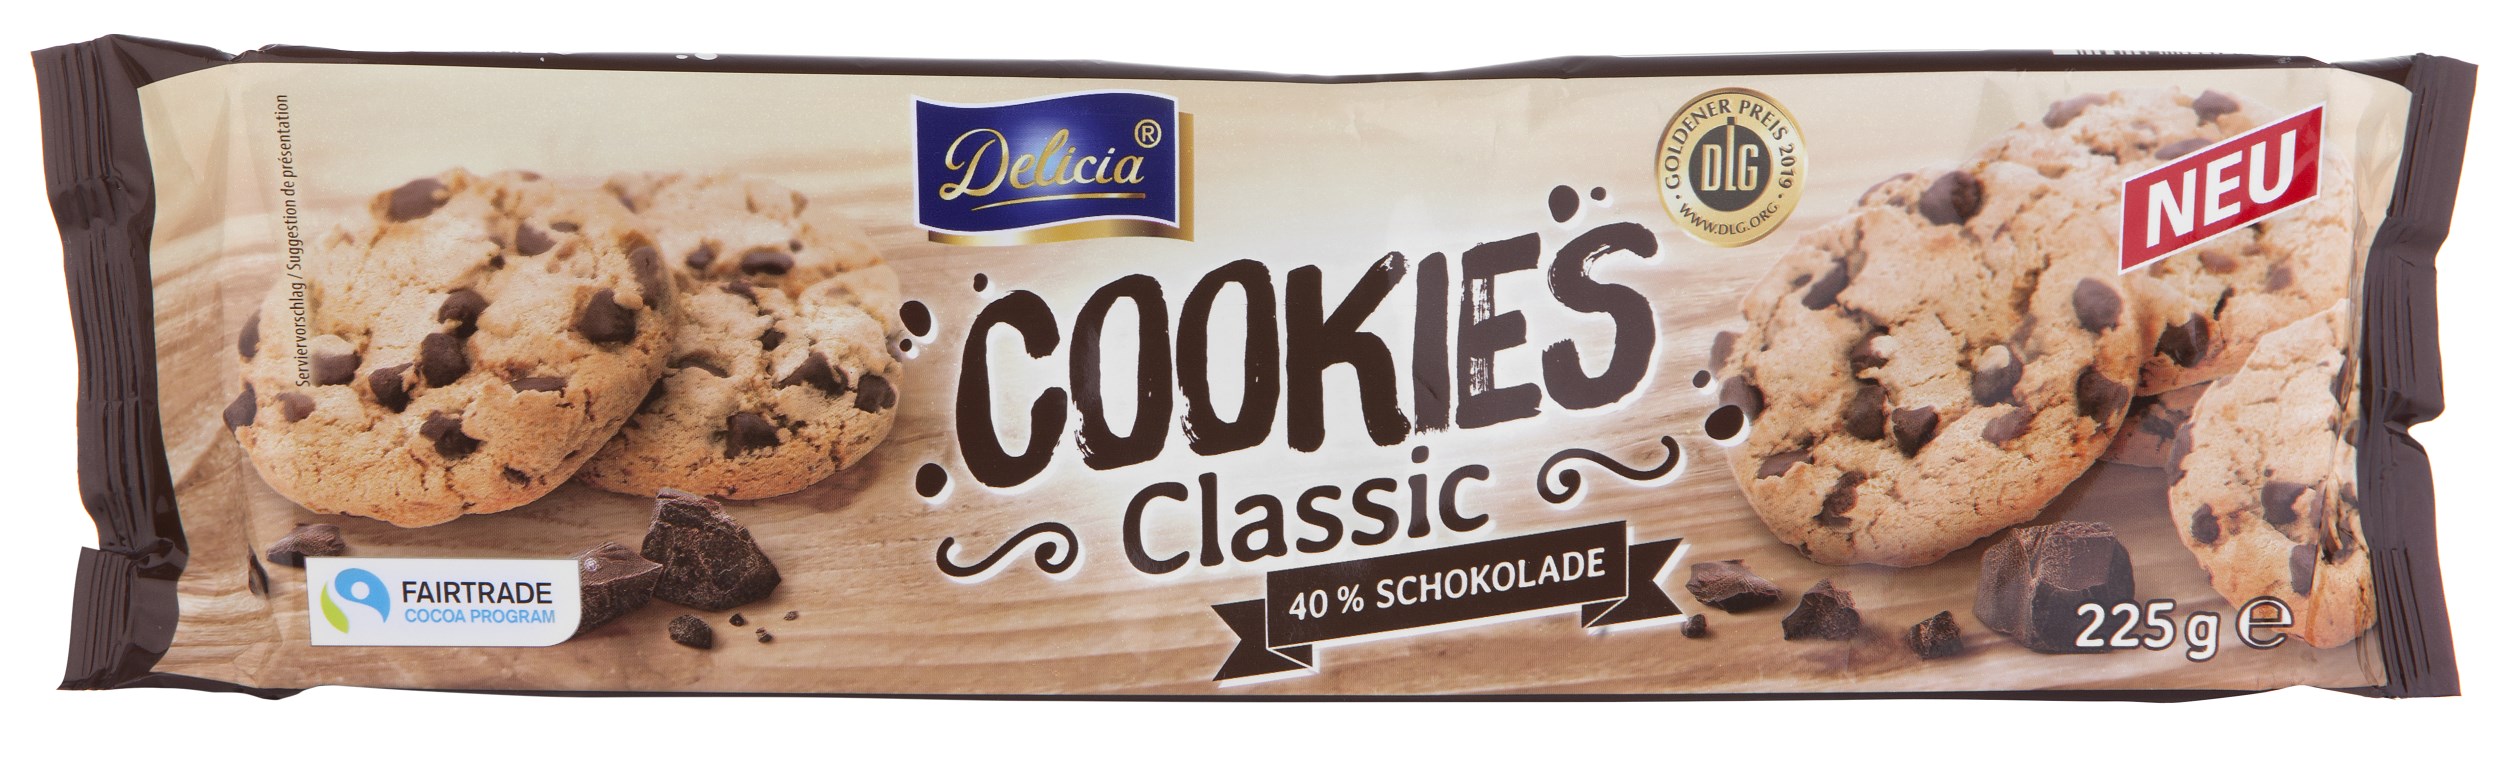 Delicia Cookies Classic